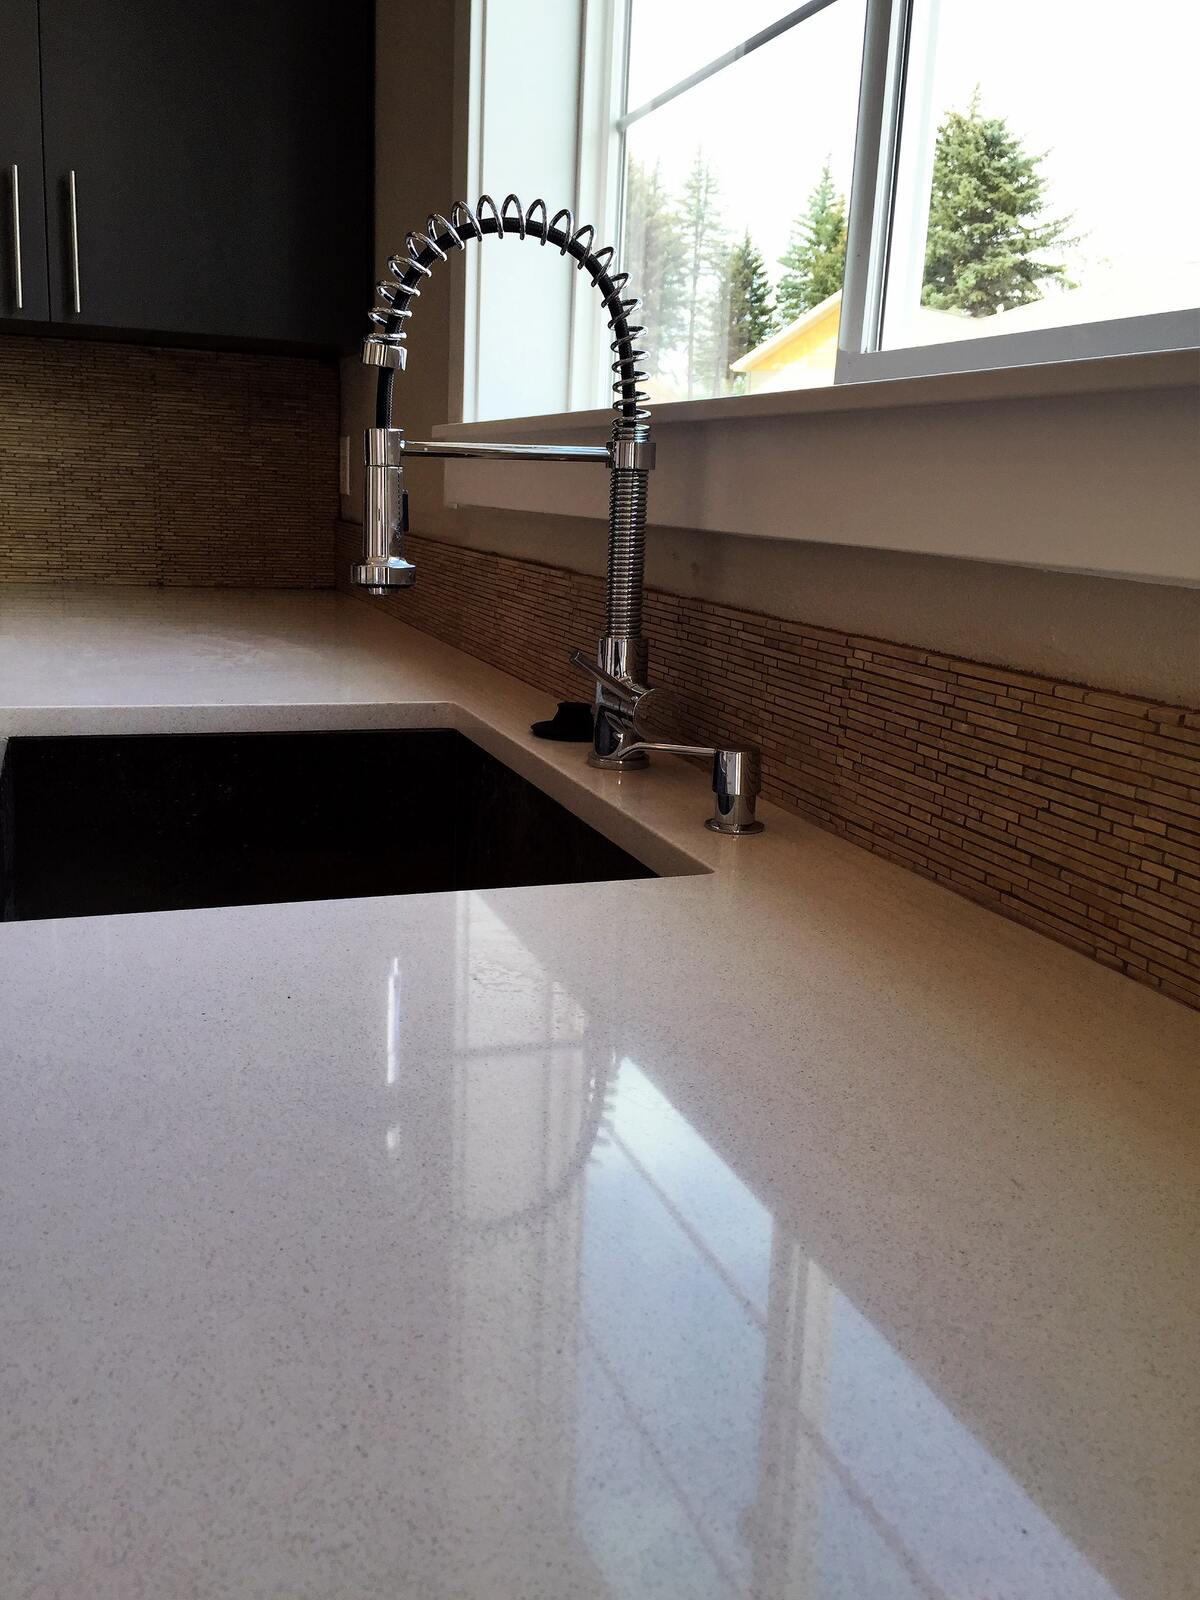 stainless steel sink faucet in wyoming custom home